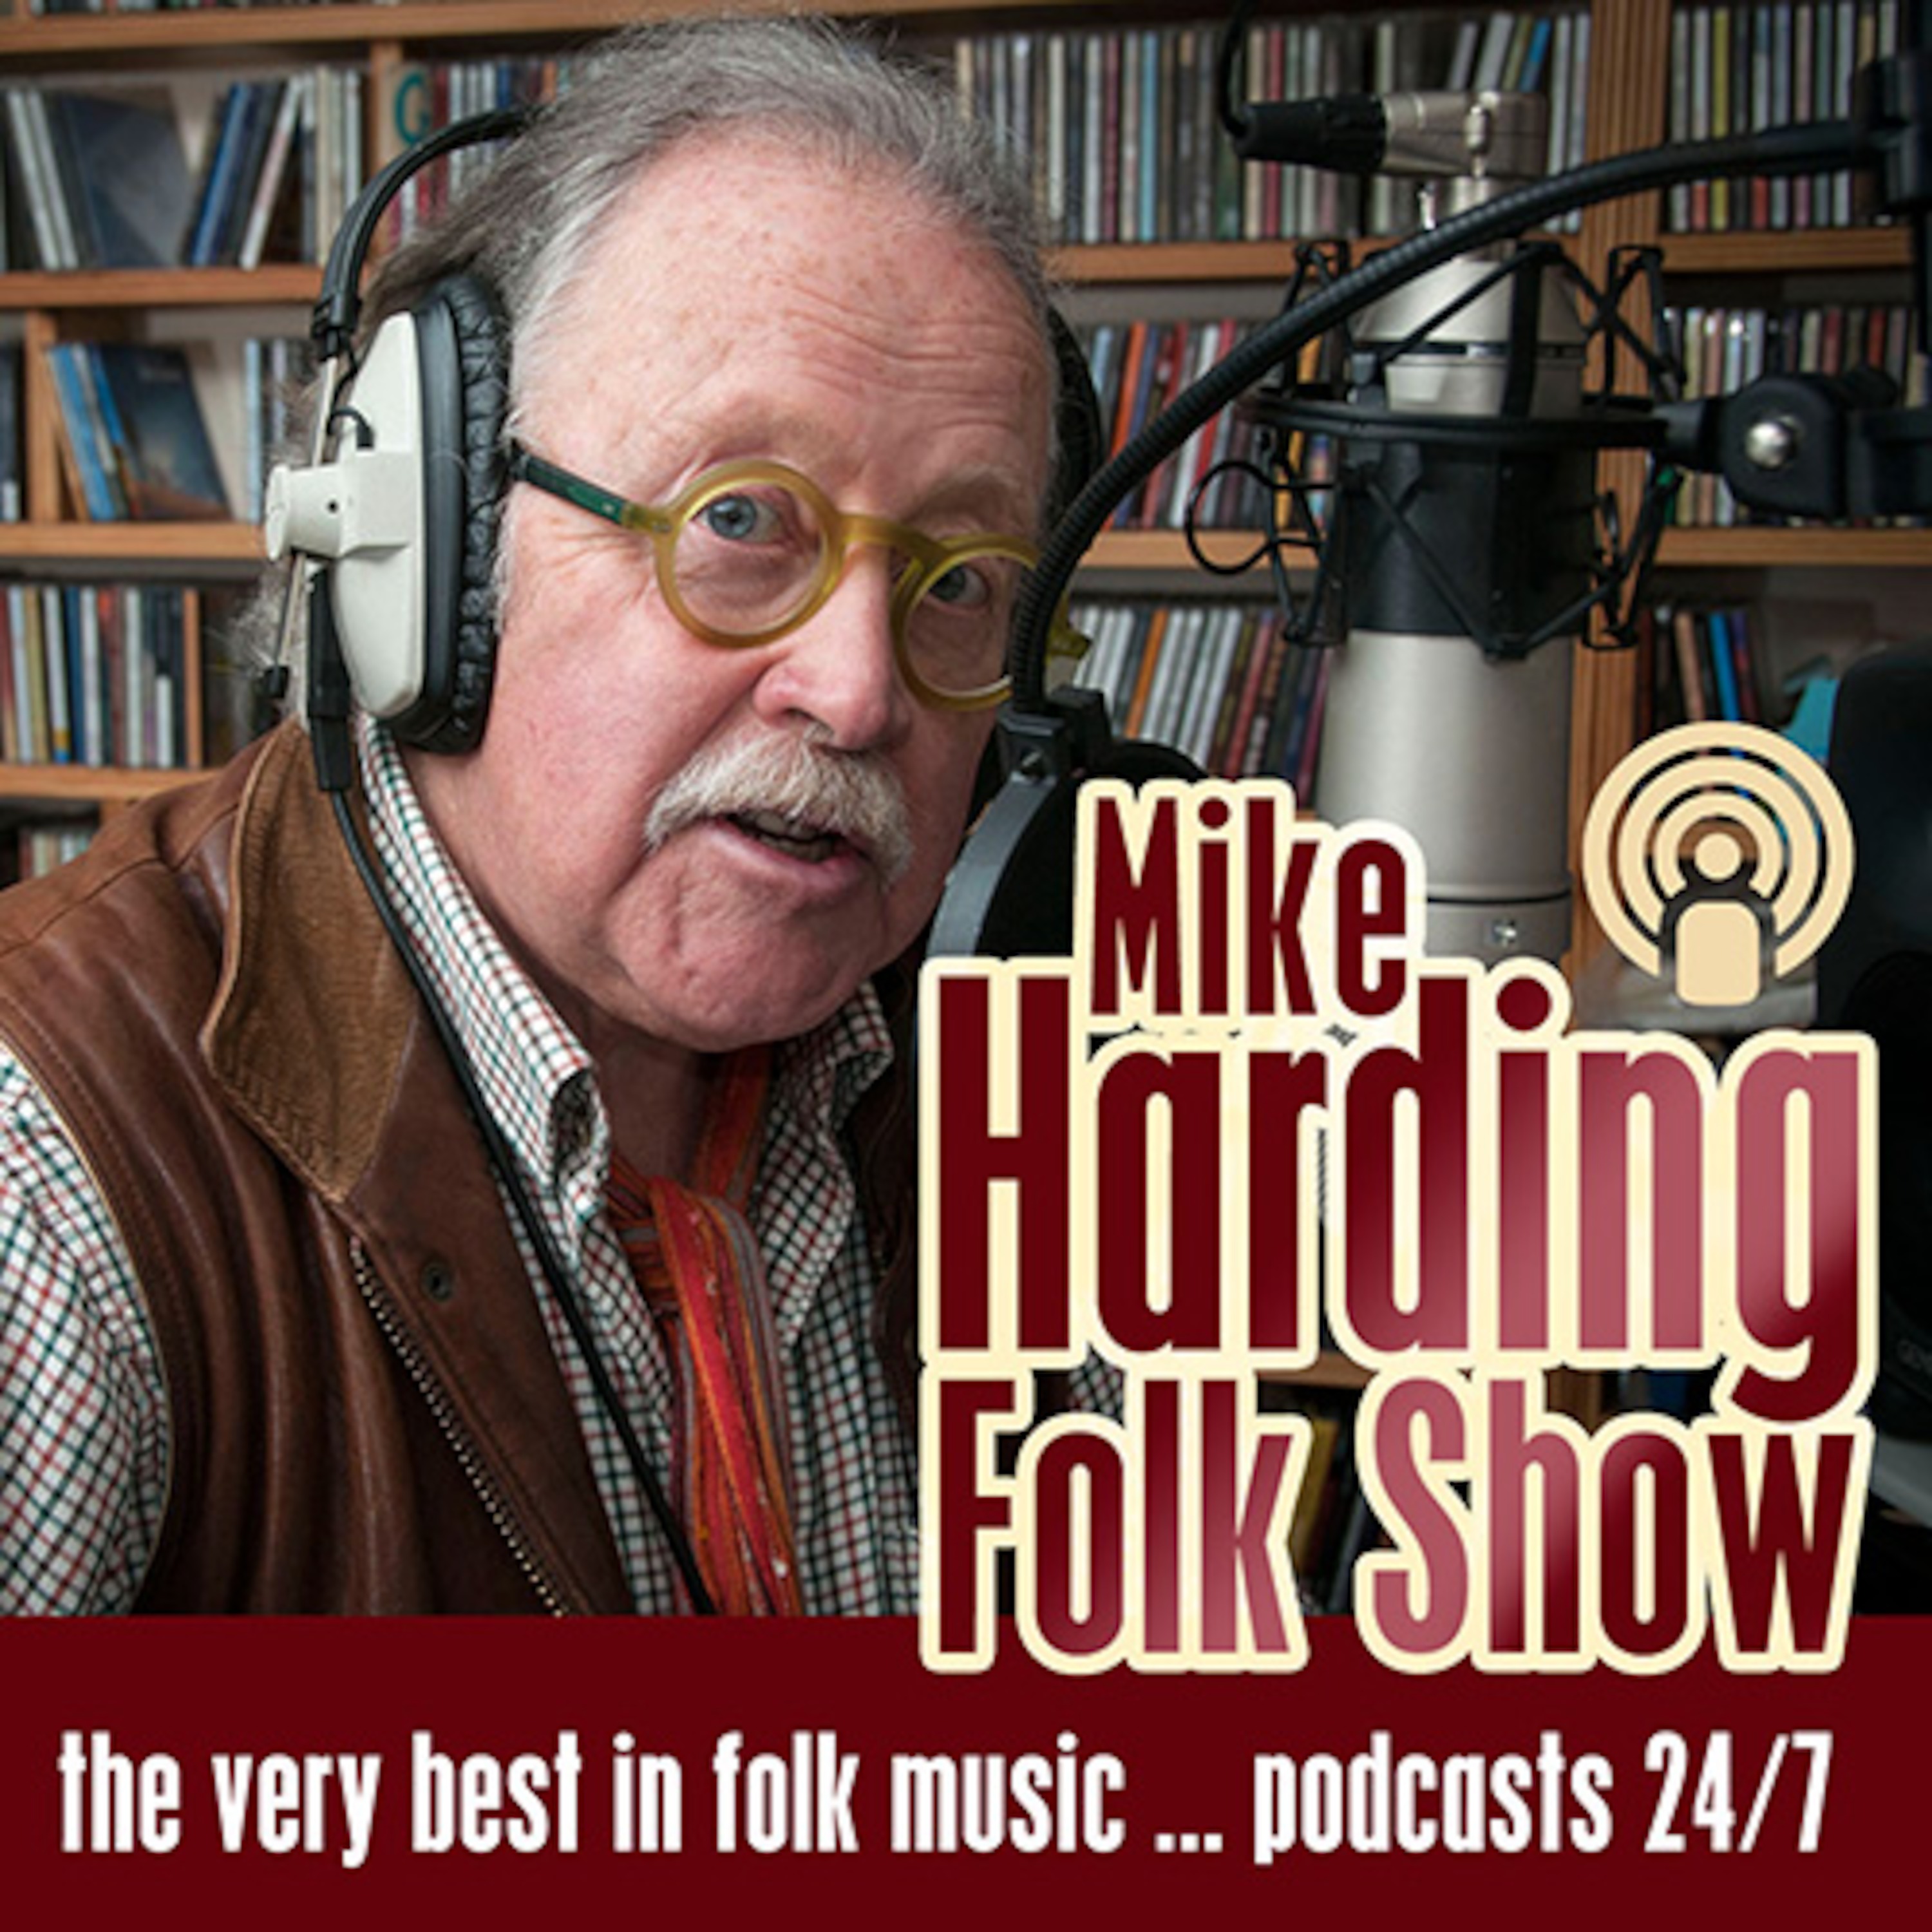 Mike Harding Folk Show 06